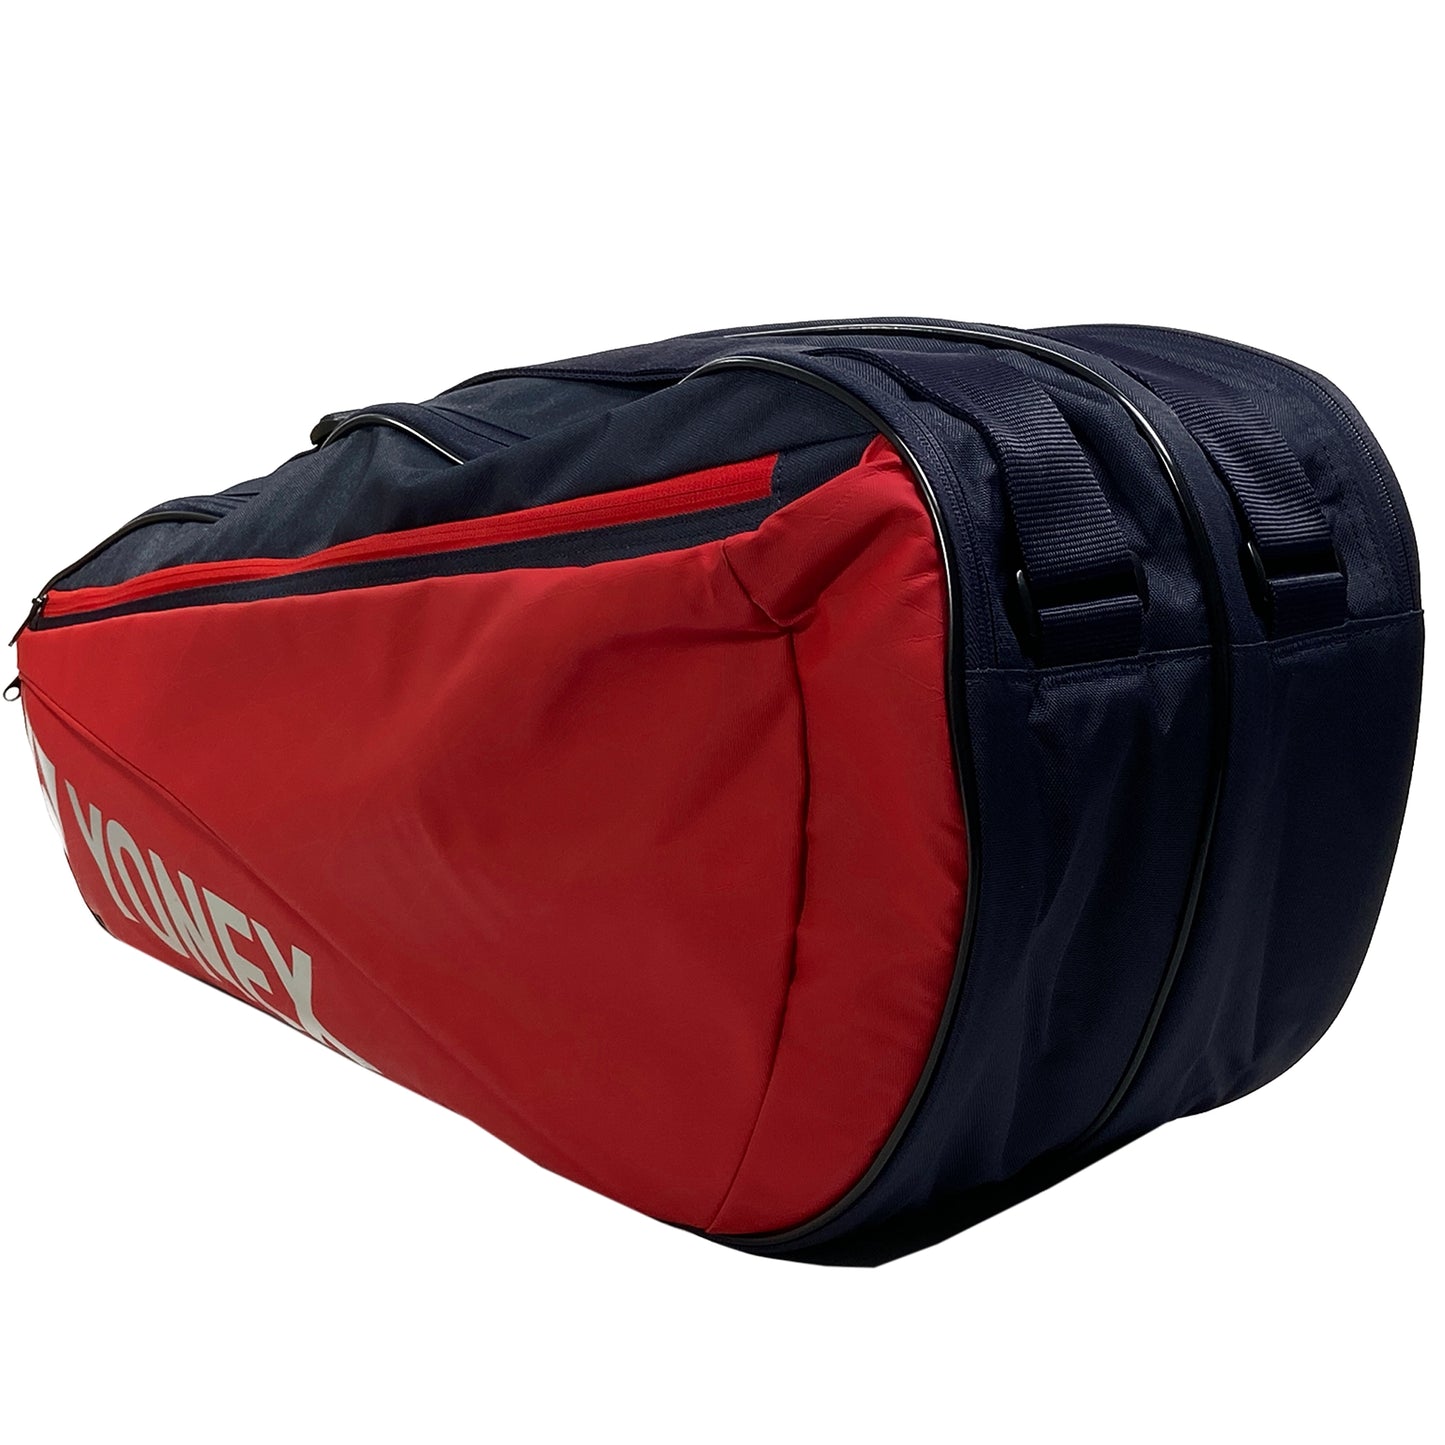 Yonex 6pk Team Racquet Bag (BAG42326) Scarlet